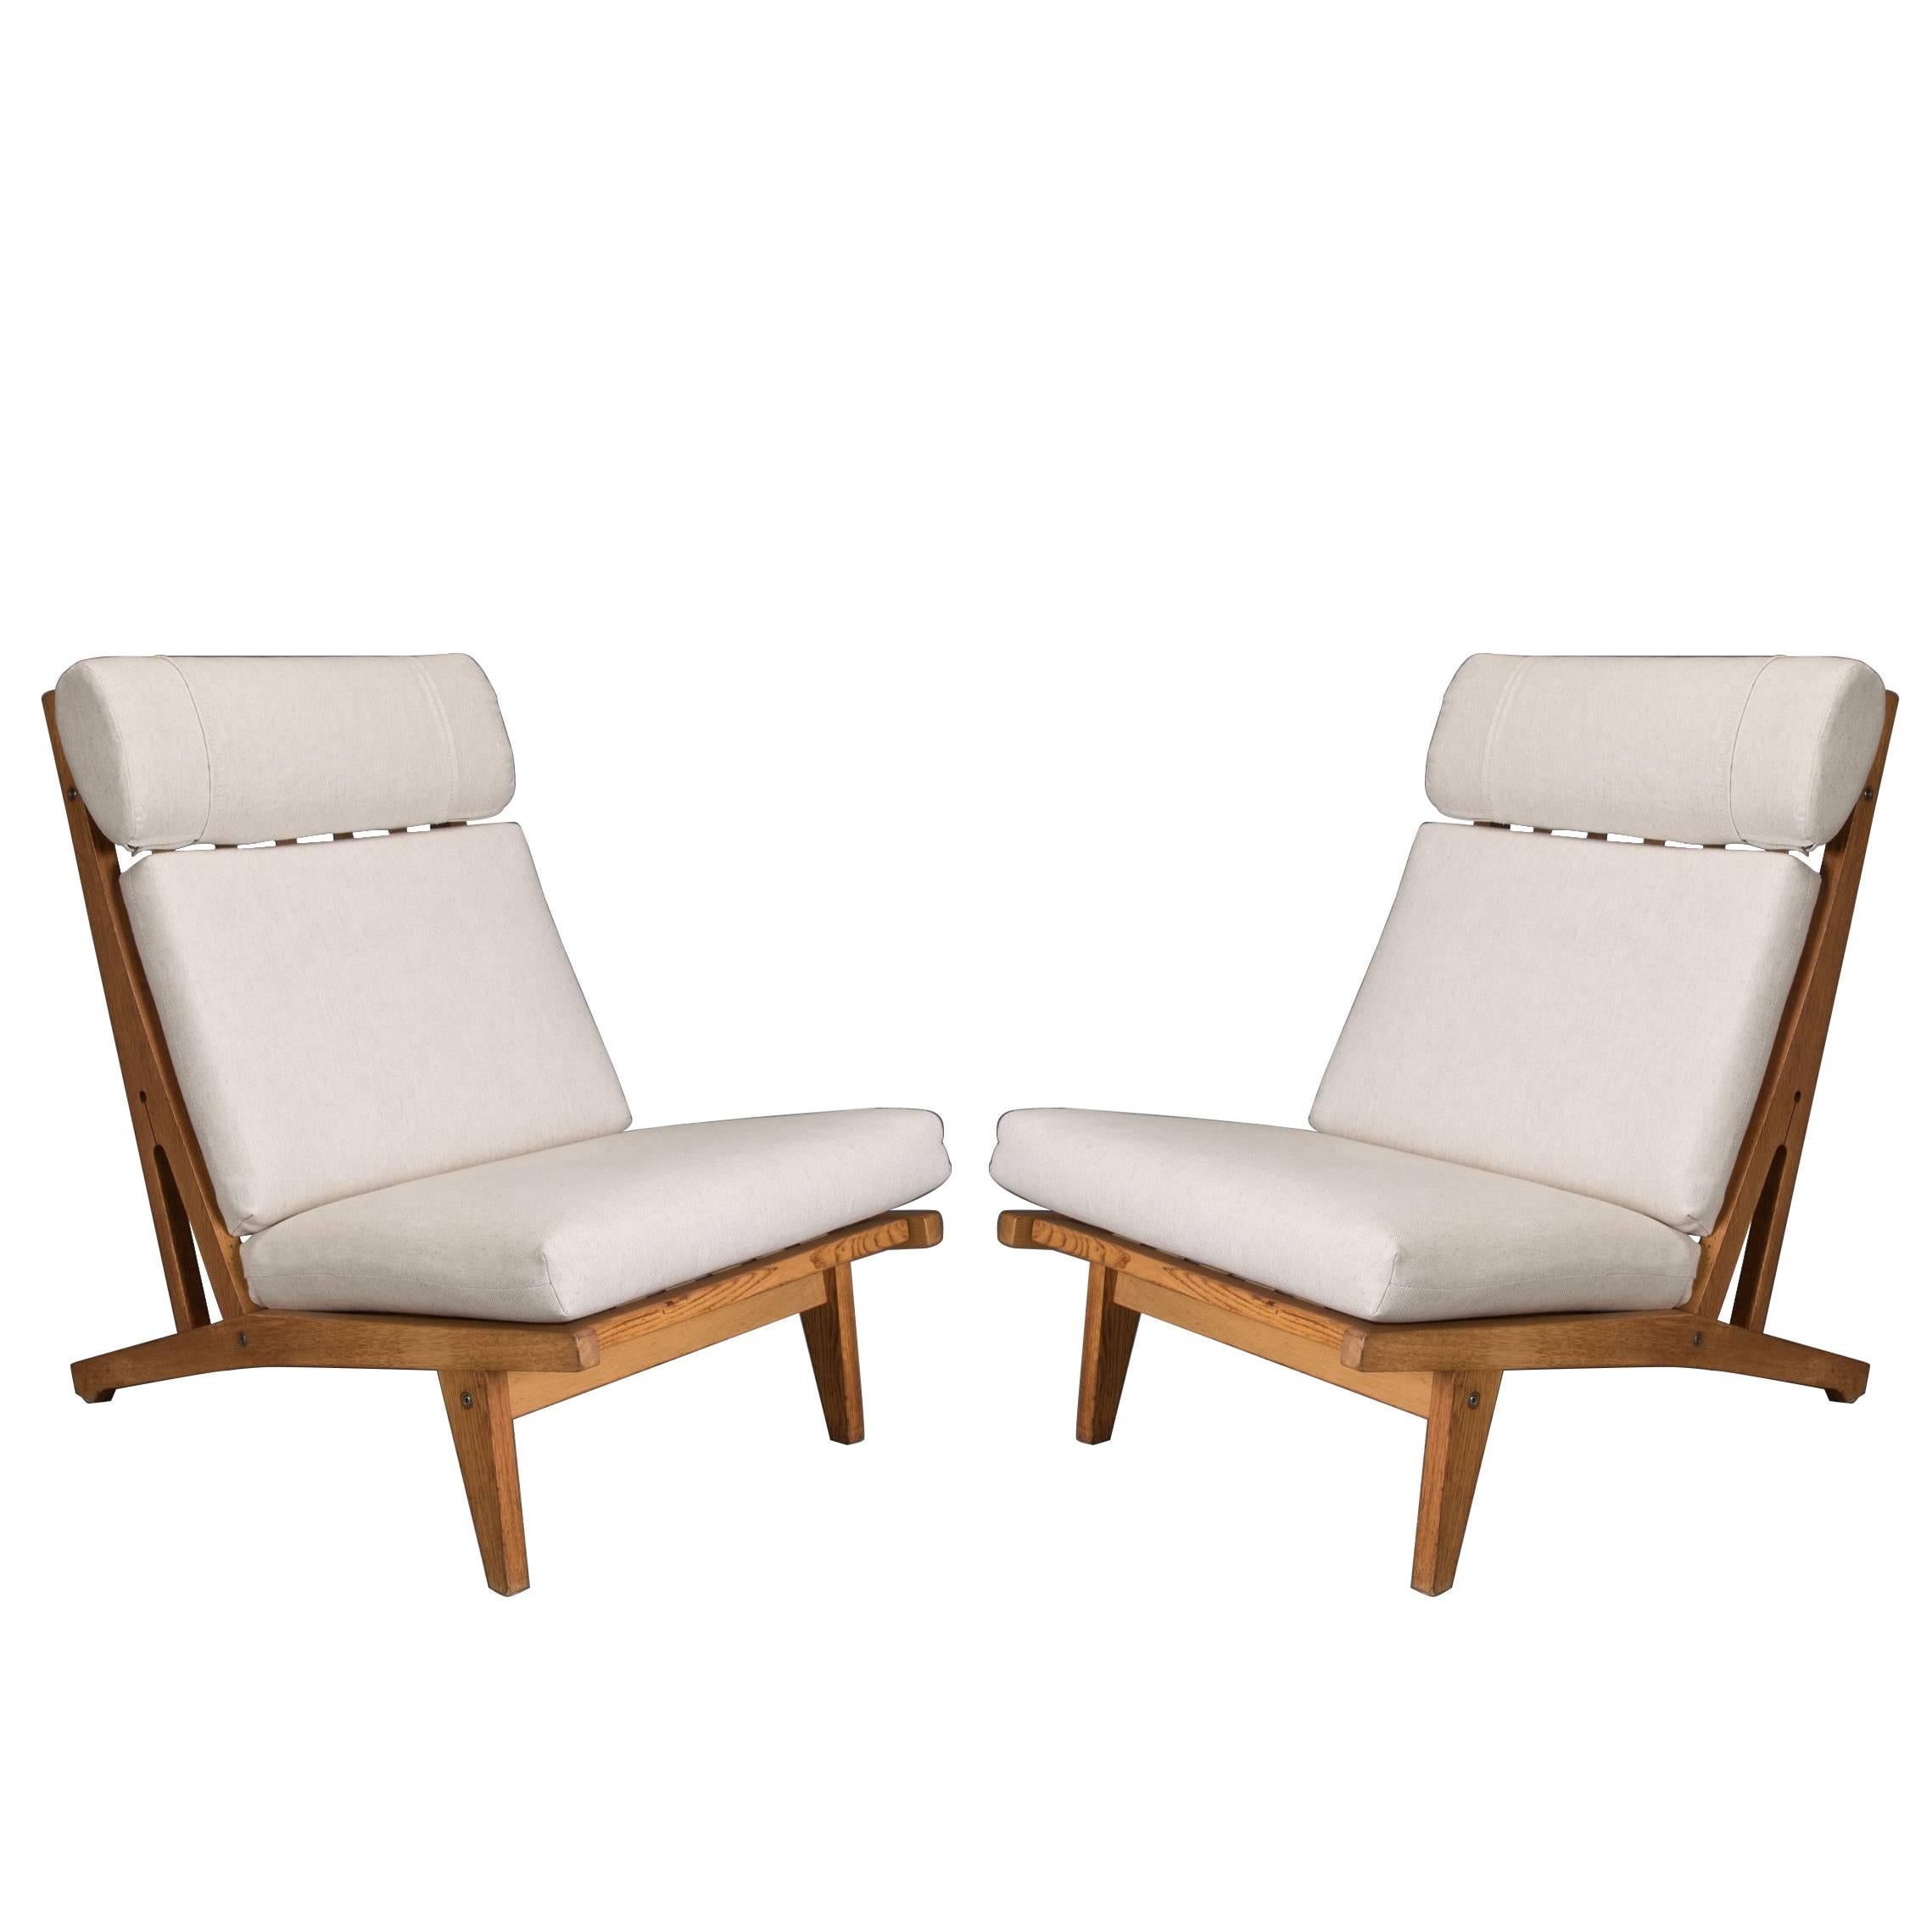 Pair of GE375 High Back Lounge Chair by Hans Wegner for GETAMA